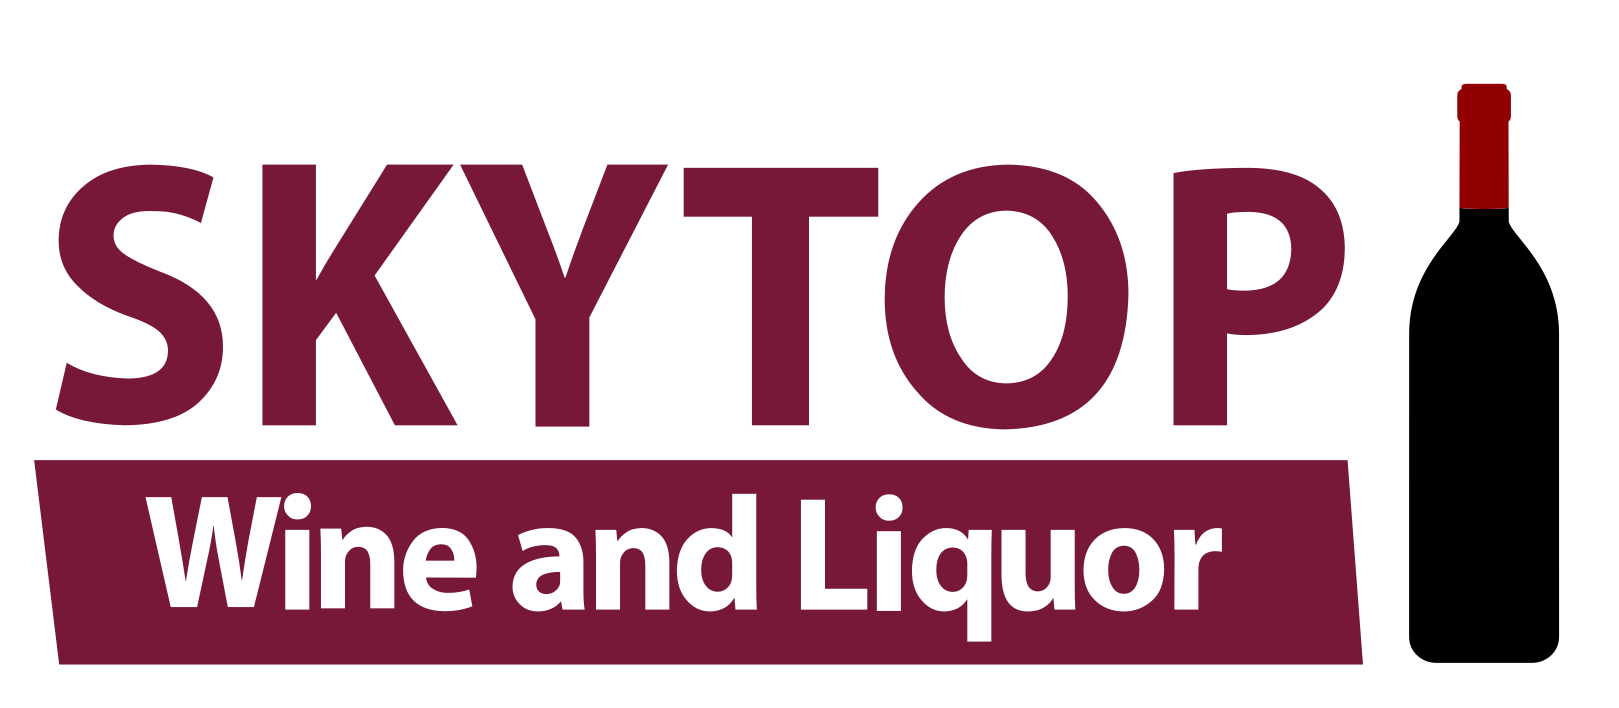 skytop logo